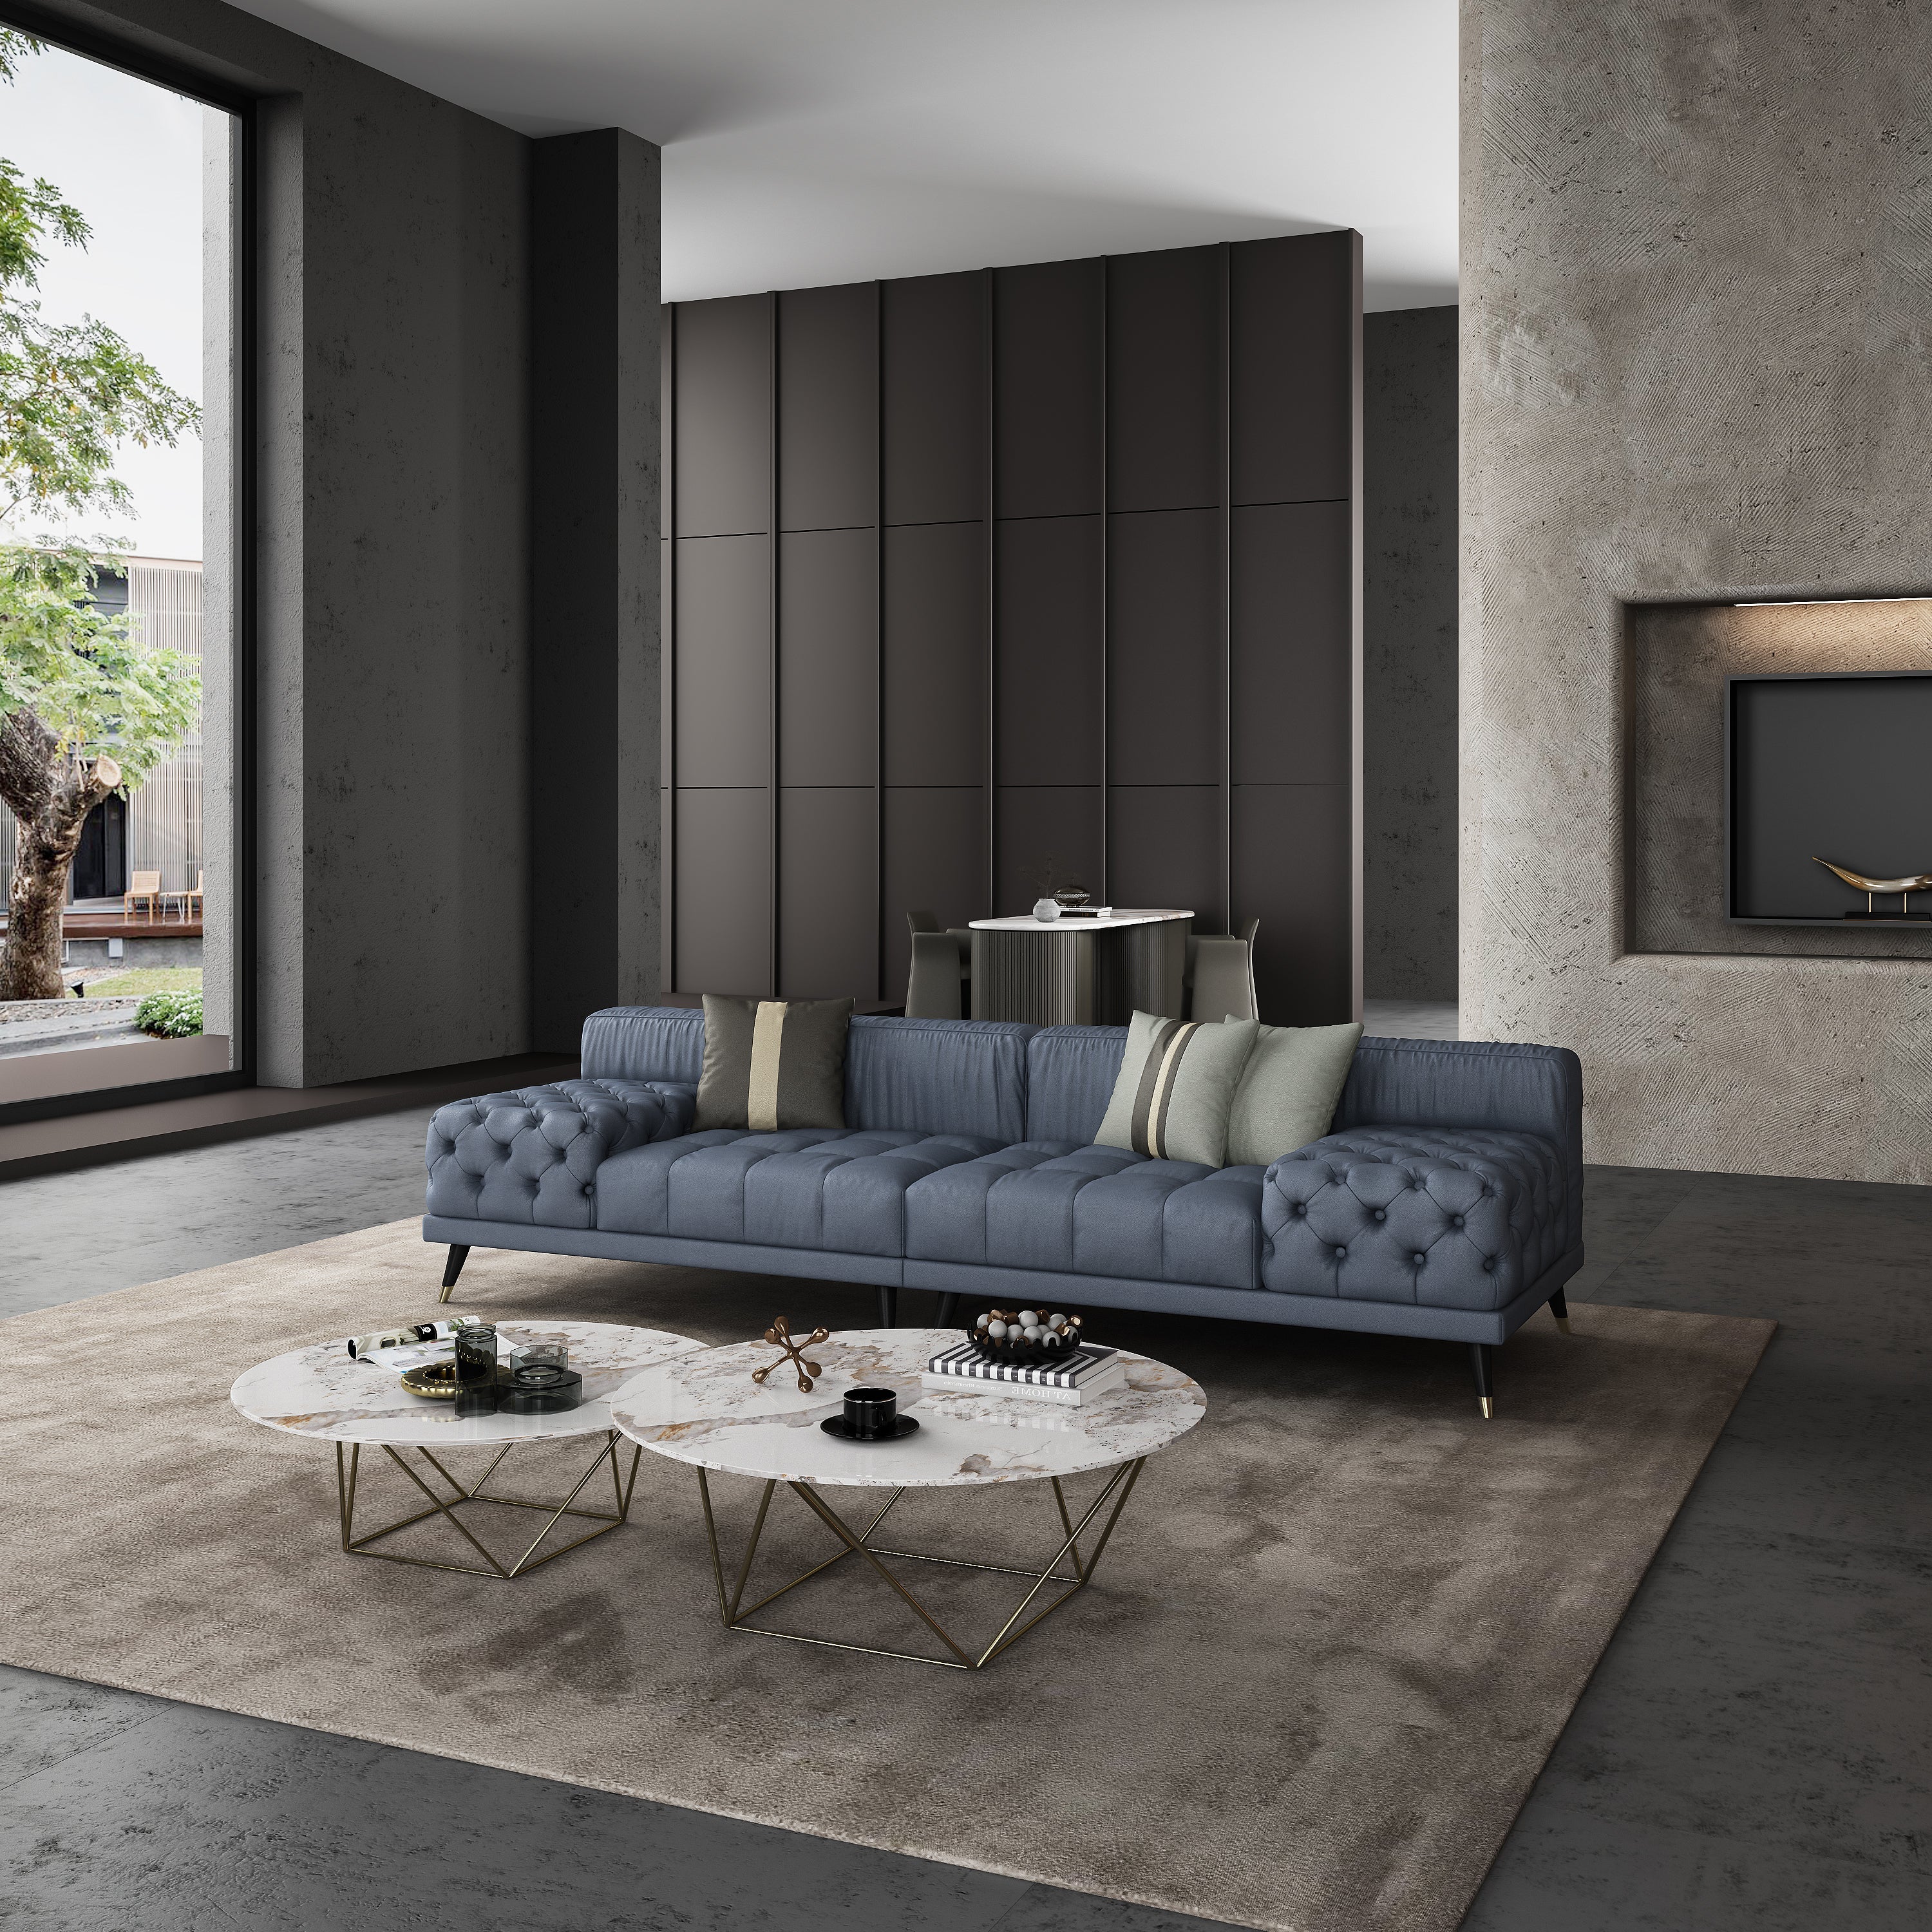 European Furniture - Outlander 4 Seater Sofa Gray Italian Leather - EF-88882-4S - New Star Living